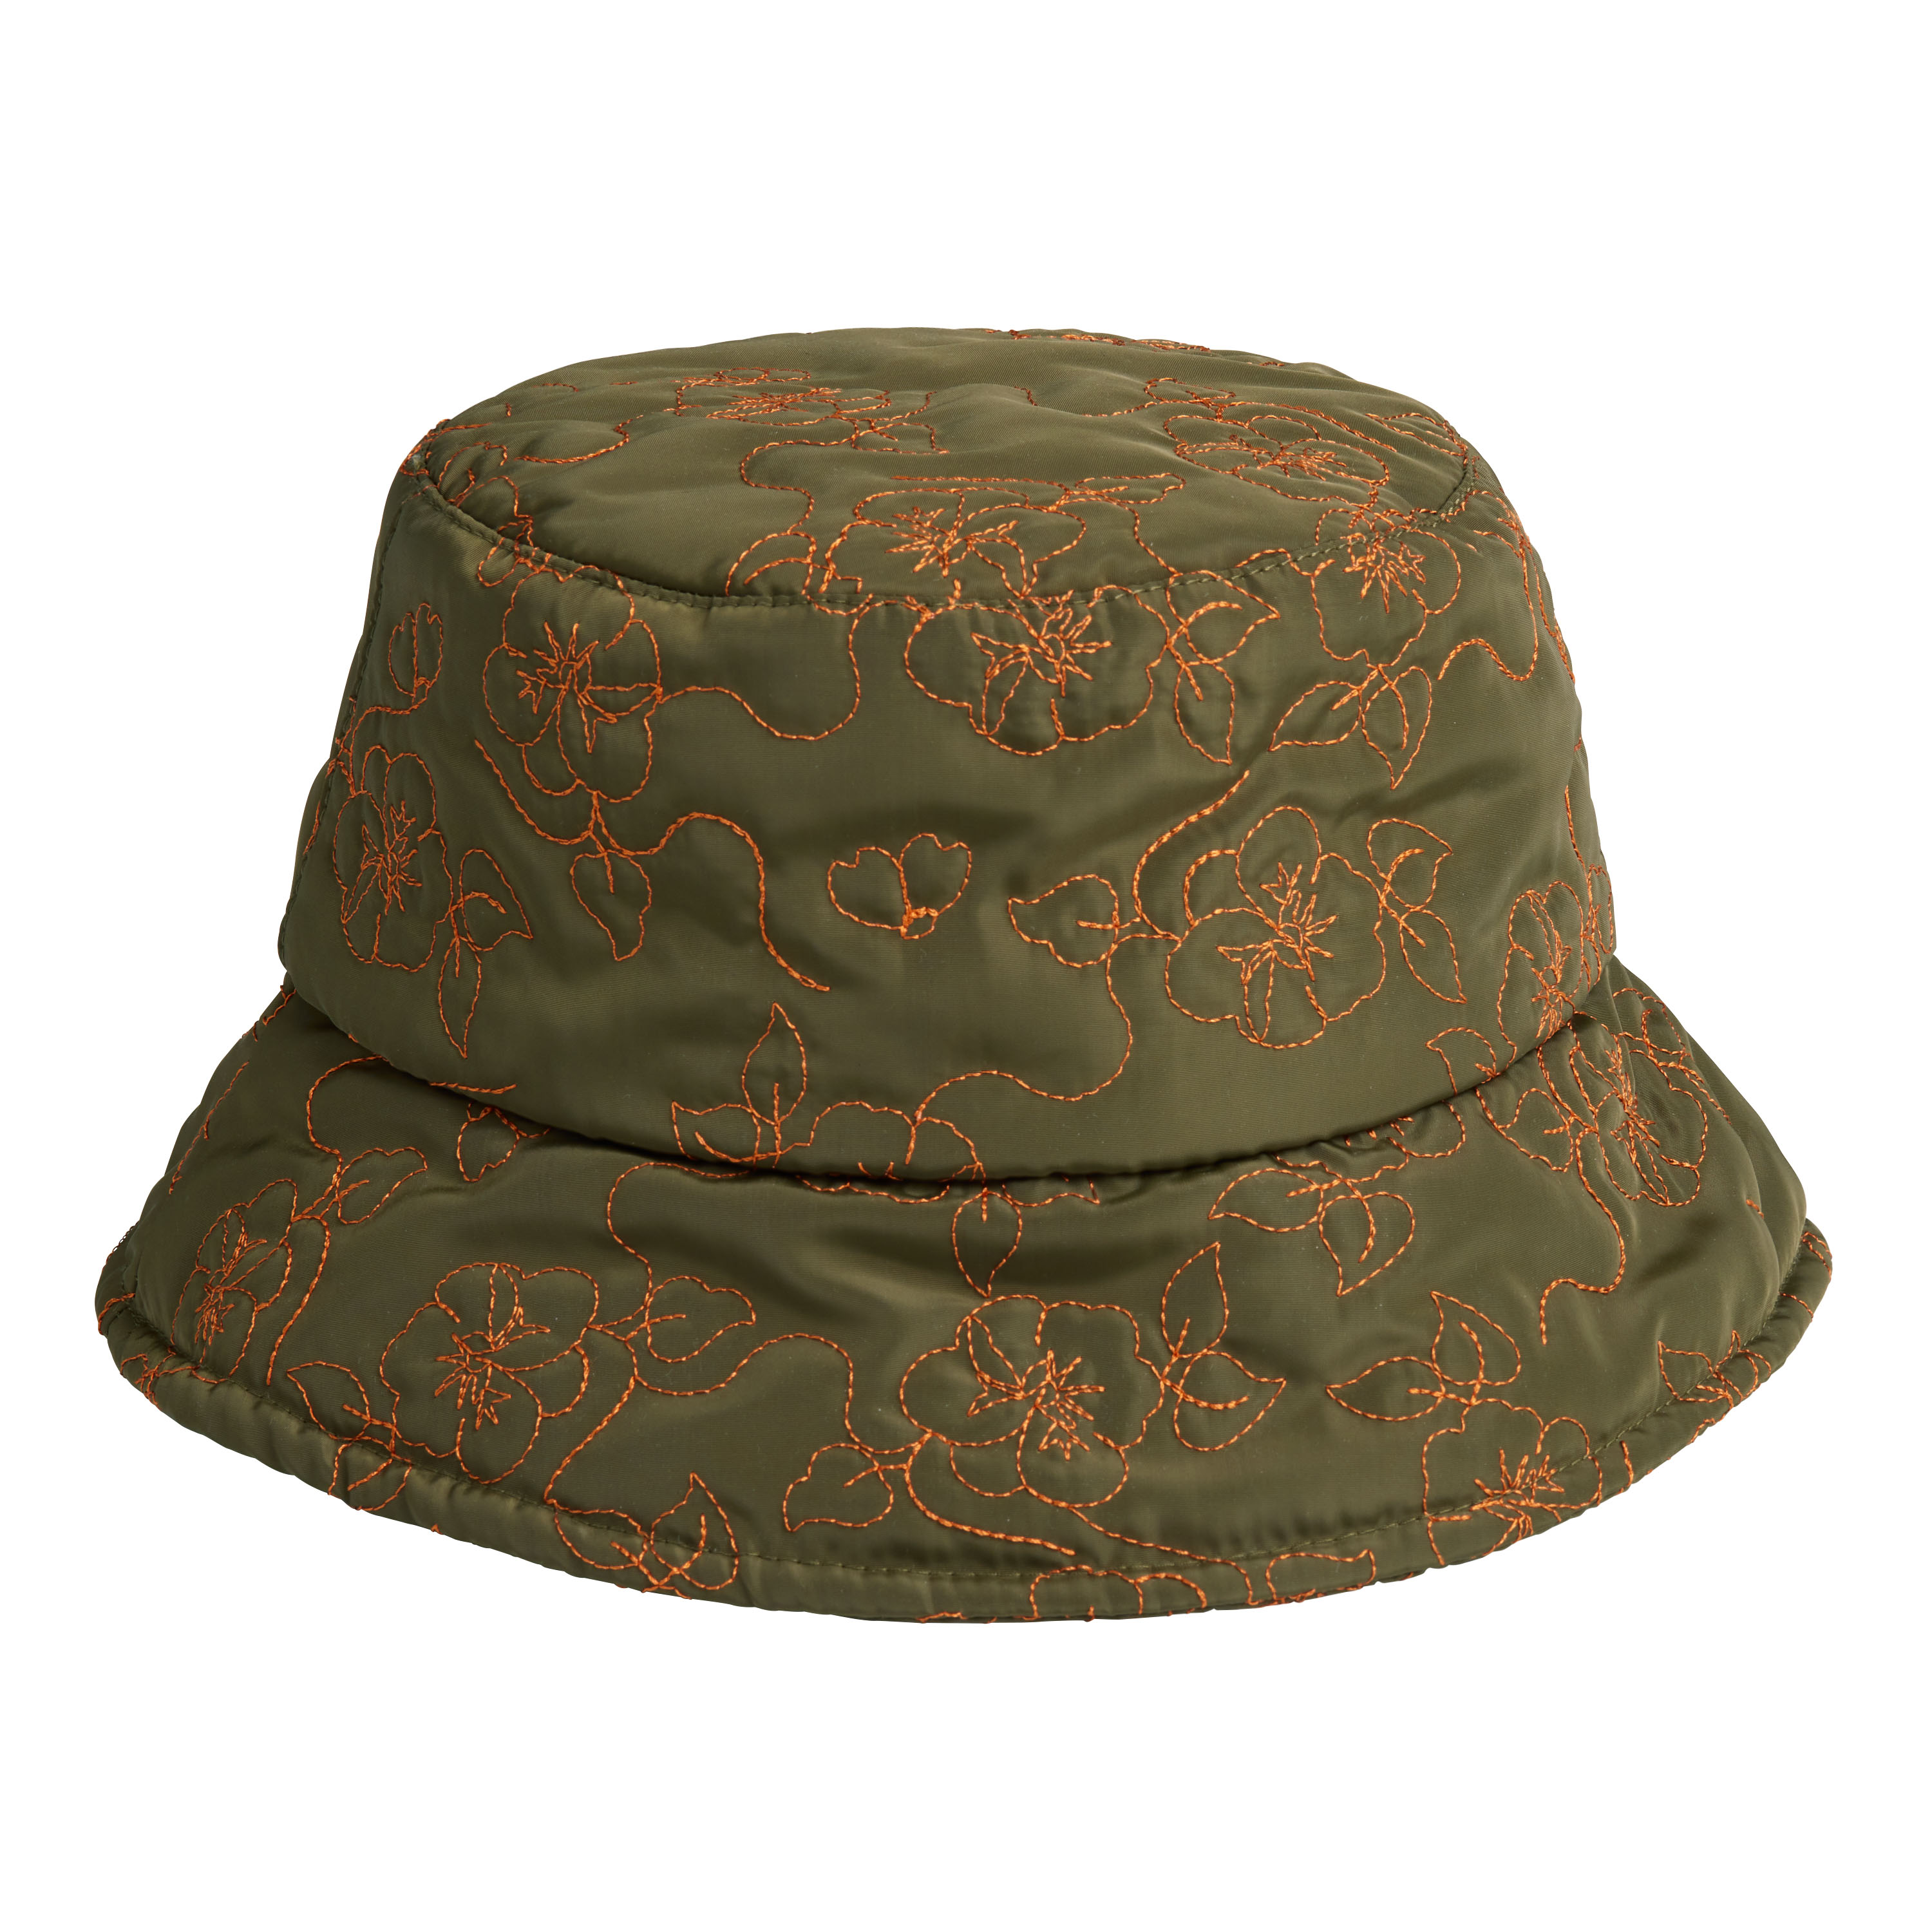 Olive Green and Orange Floral Embroidered Bucket Hat - World Market